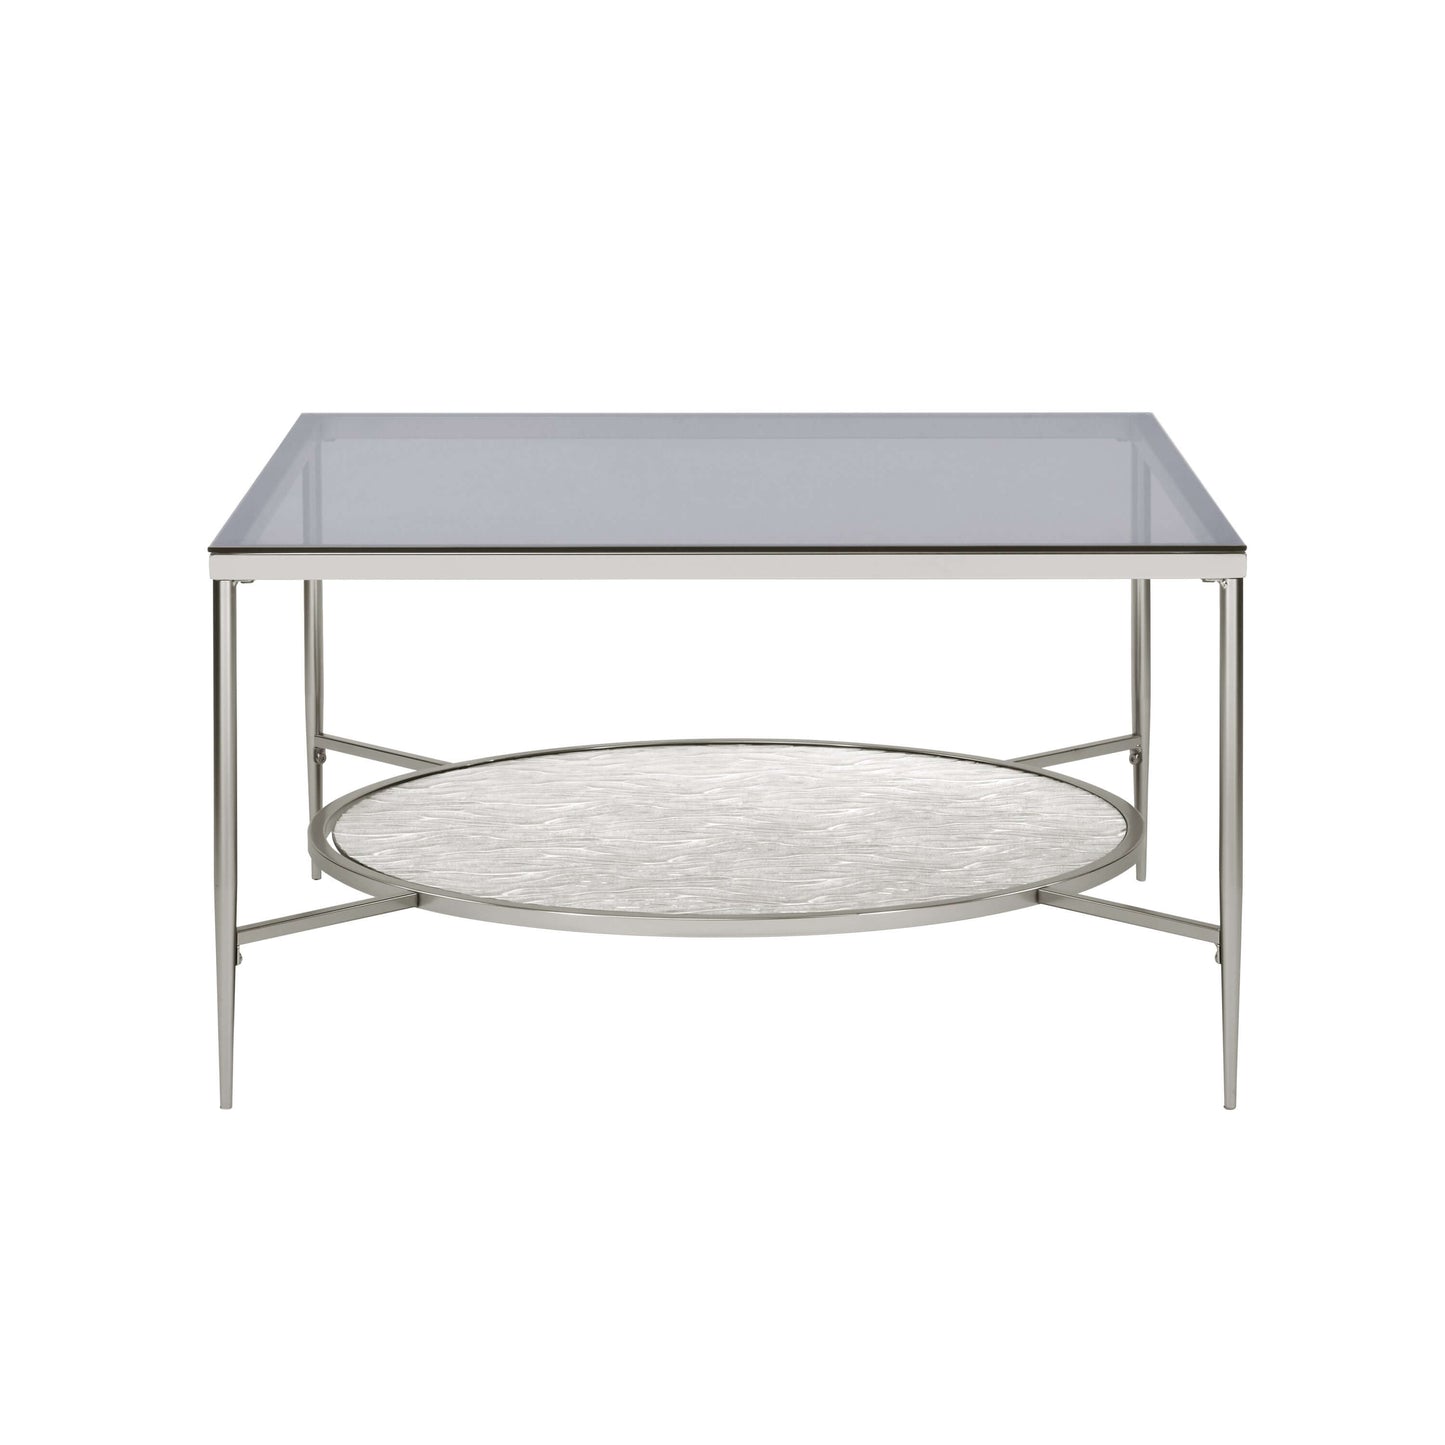 Adelrik Coffee Table Square 2 Tier Glass Top Chrome Frame - Revel Sofa 